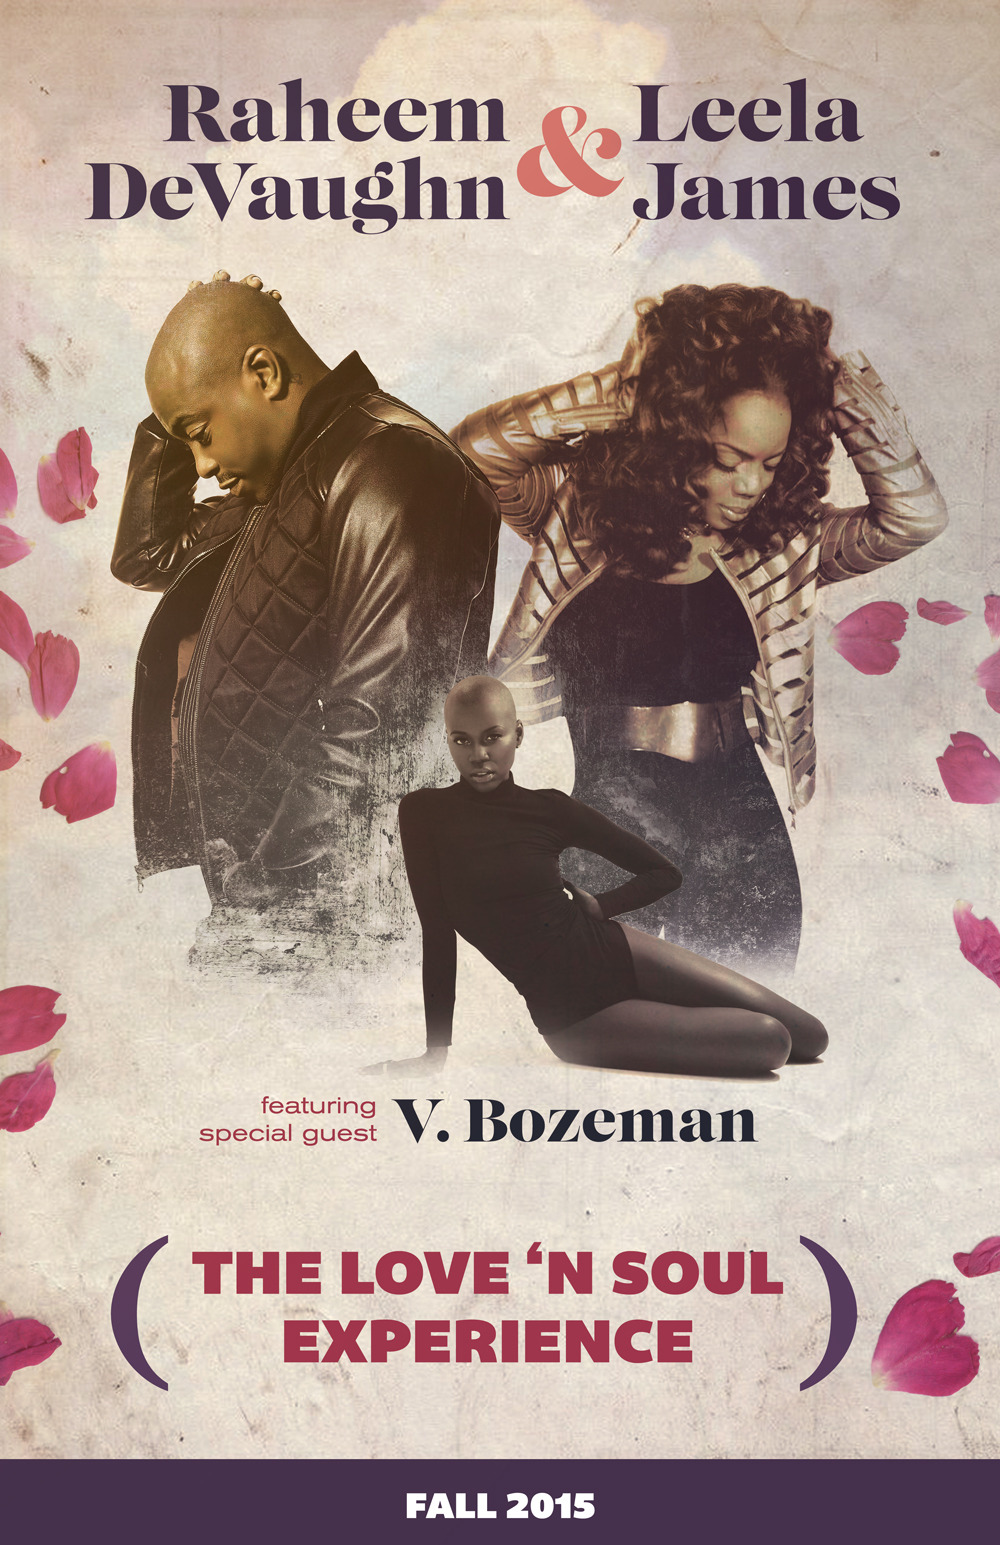 Raheem DeVaughn & Leela James Announce "The Love 'N Soul Experience" Tour With V. Bozeman